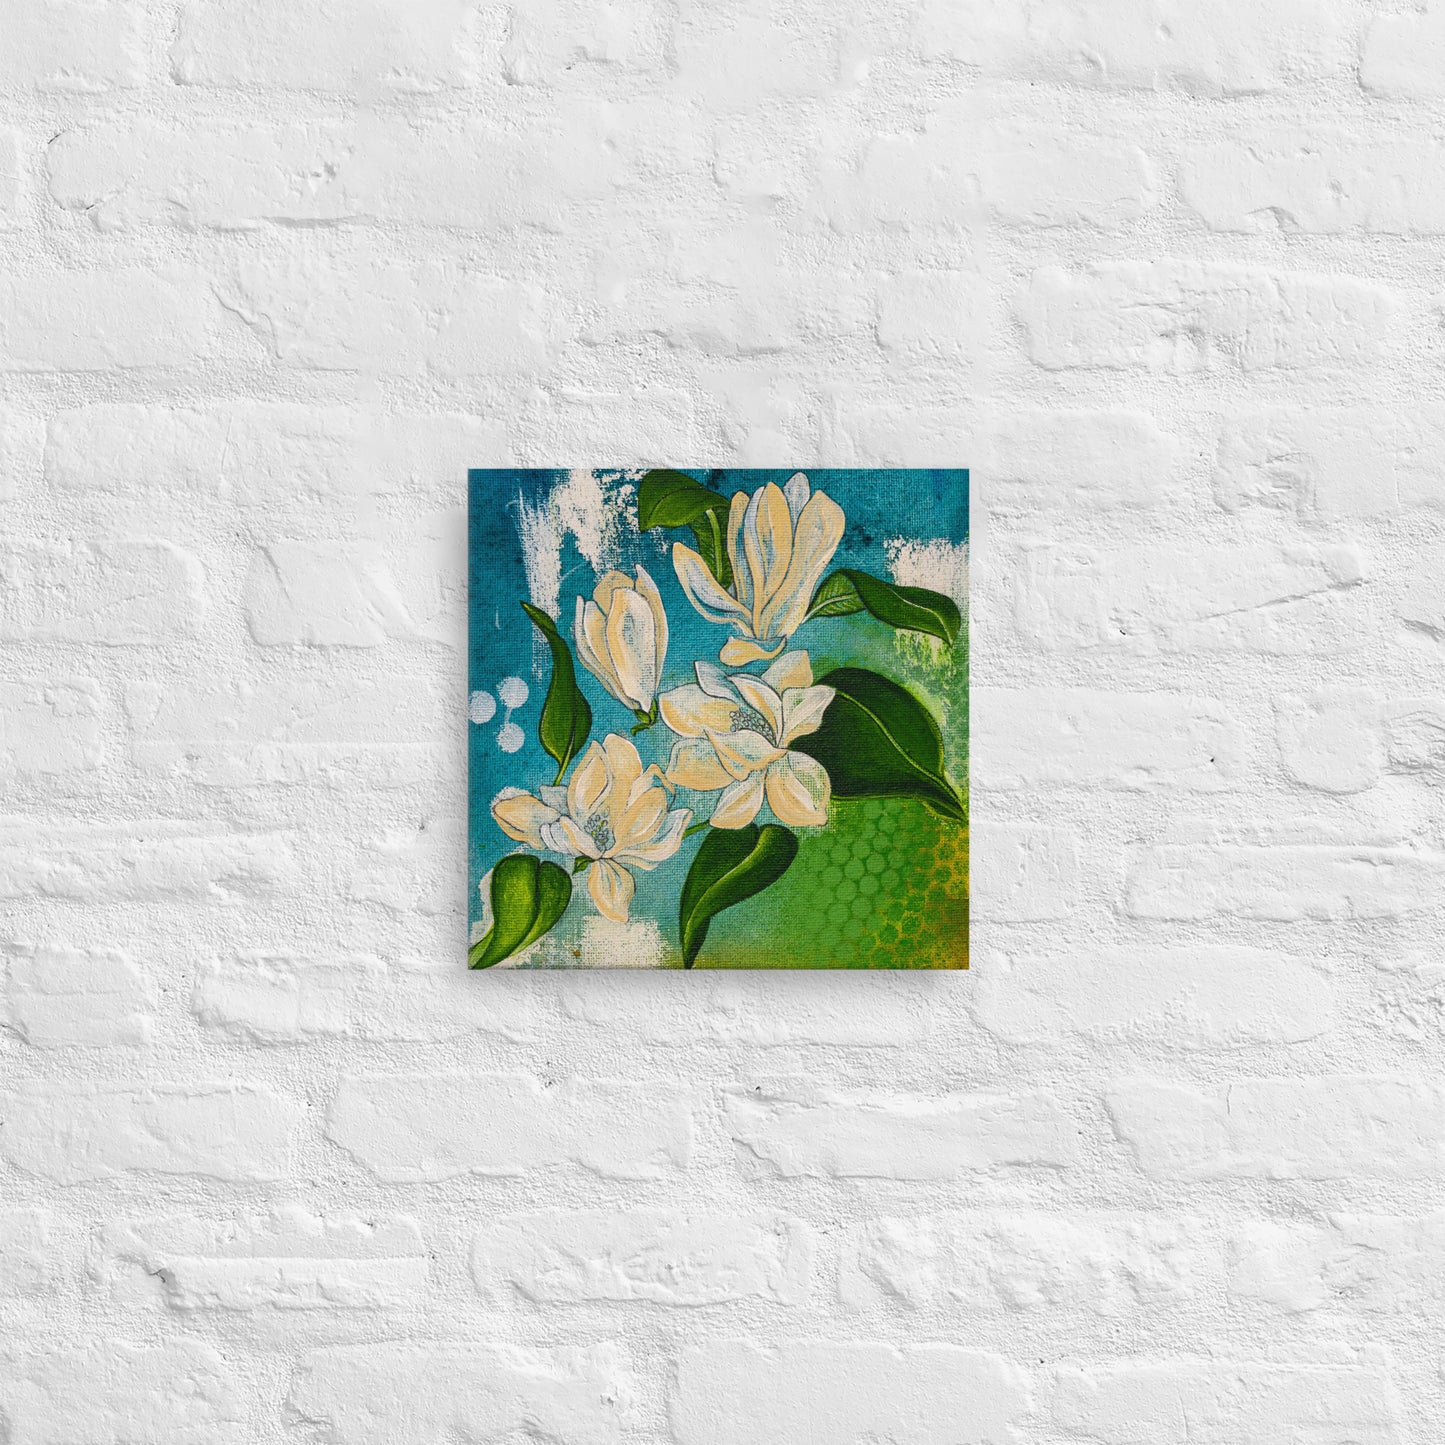 Flower Study (Magnolia) - Mixed Media Printed Canvas